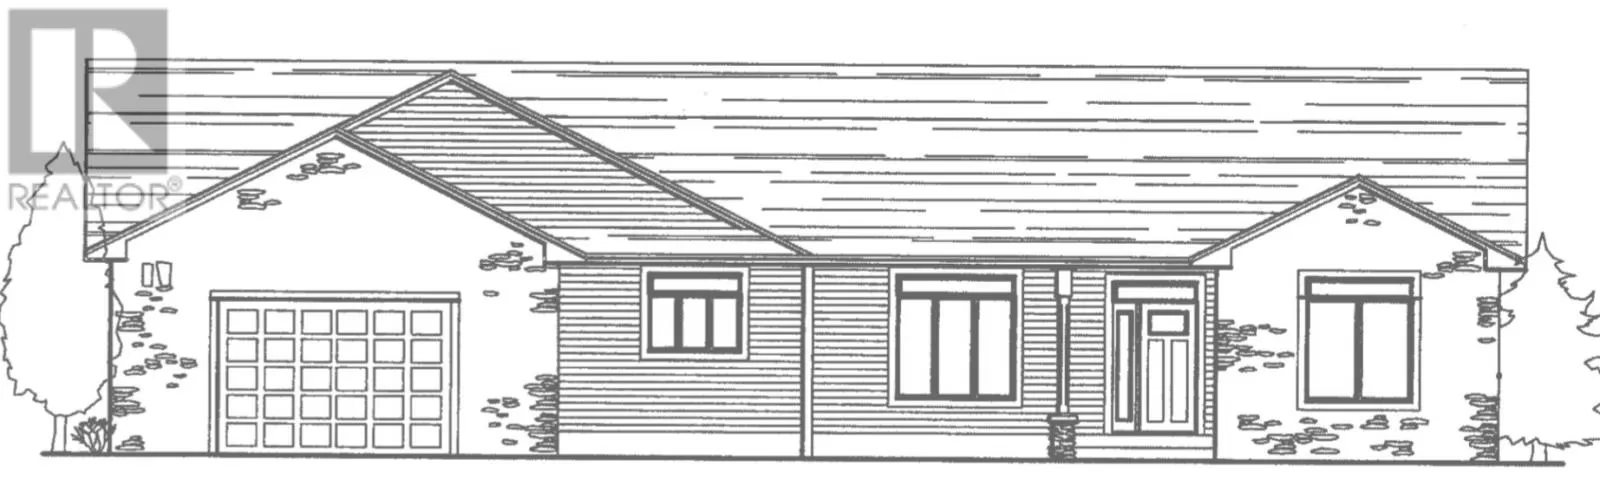 House for rent: 1 Tanglewood Lane, Torbay, Newfoundland & Labrador A1K 4G2